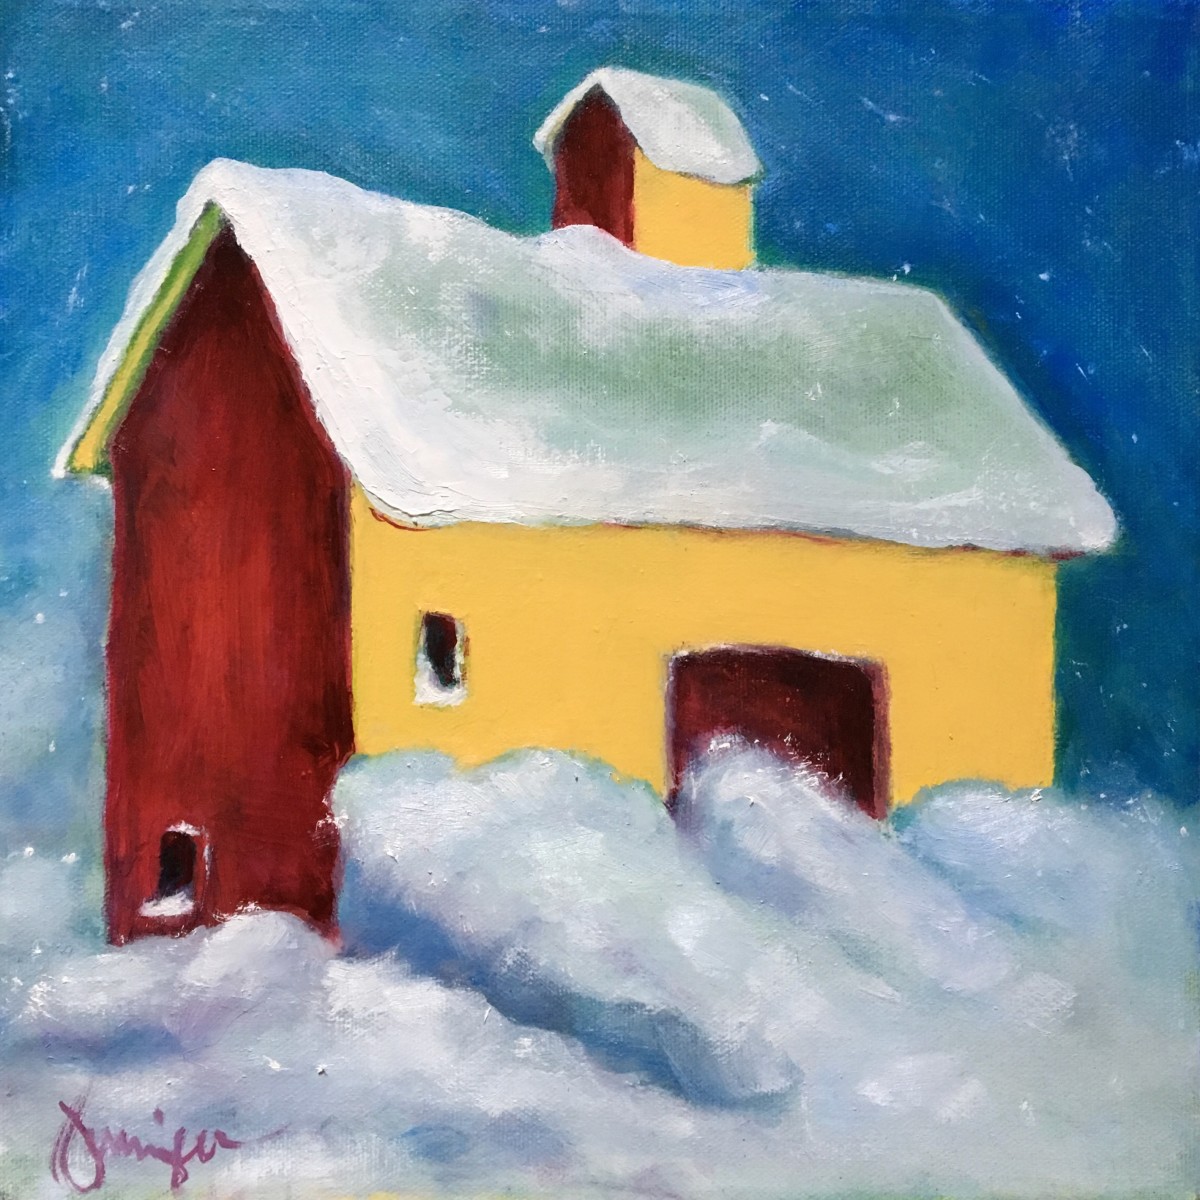 Snow Barn Still Standing by Jennifer Hooley 